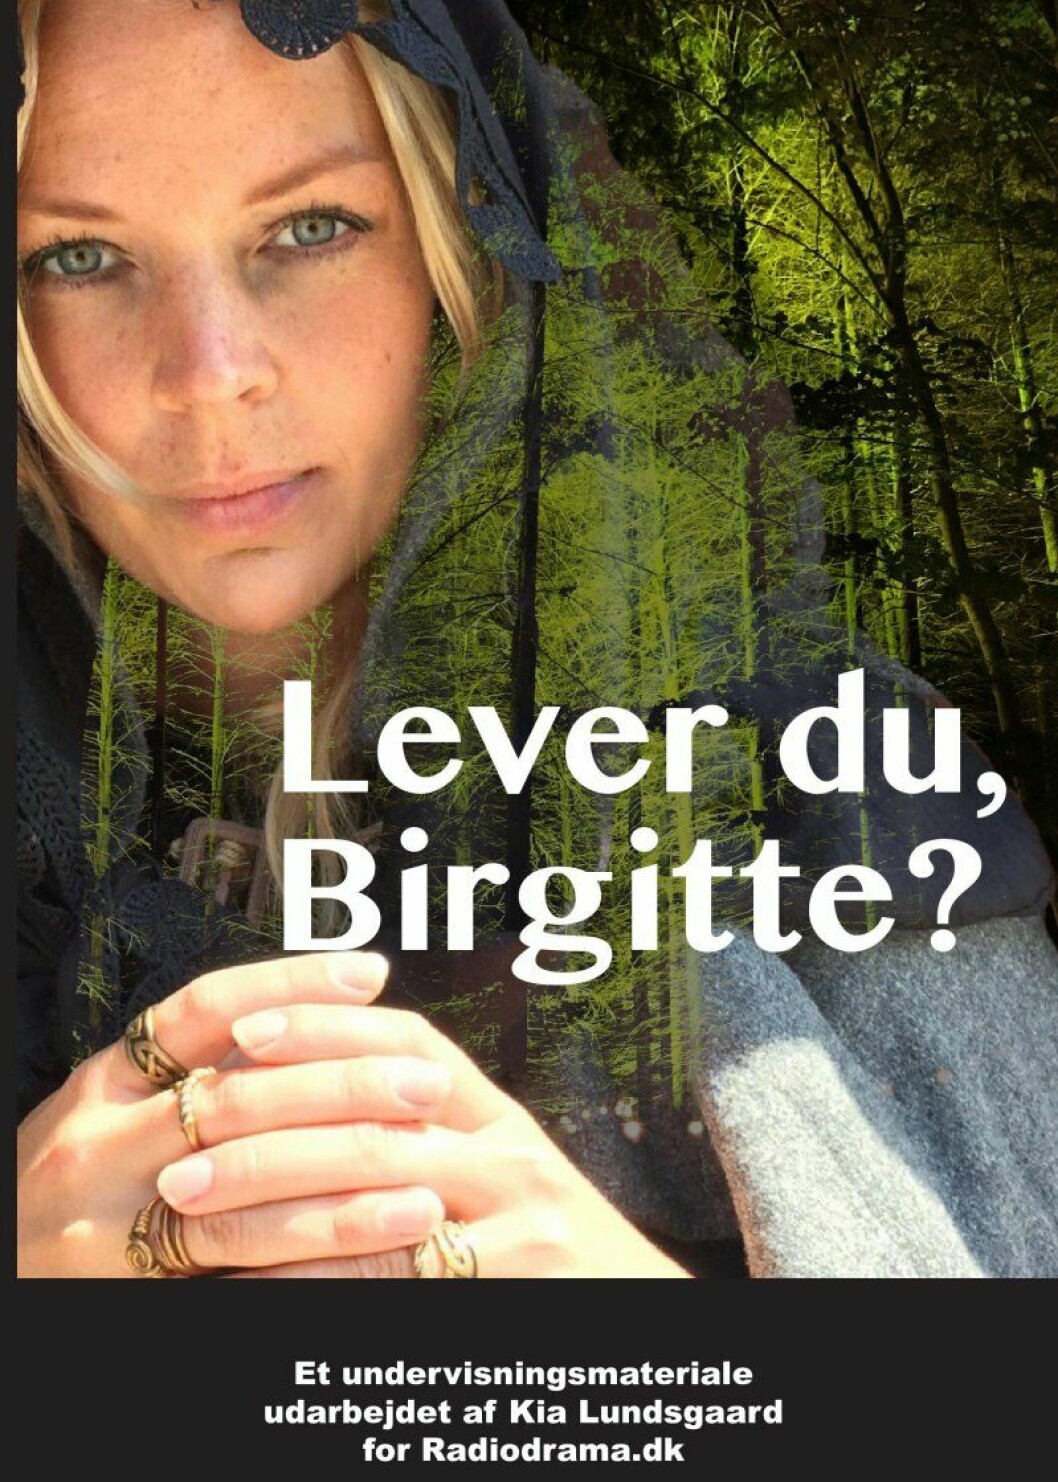 Lever du, Birgitte?